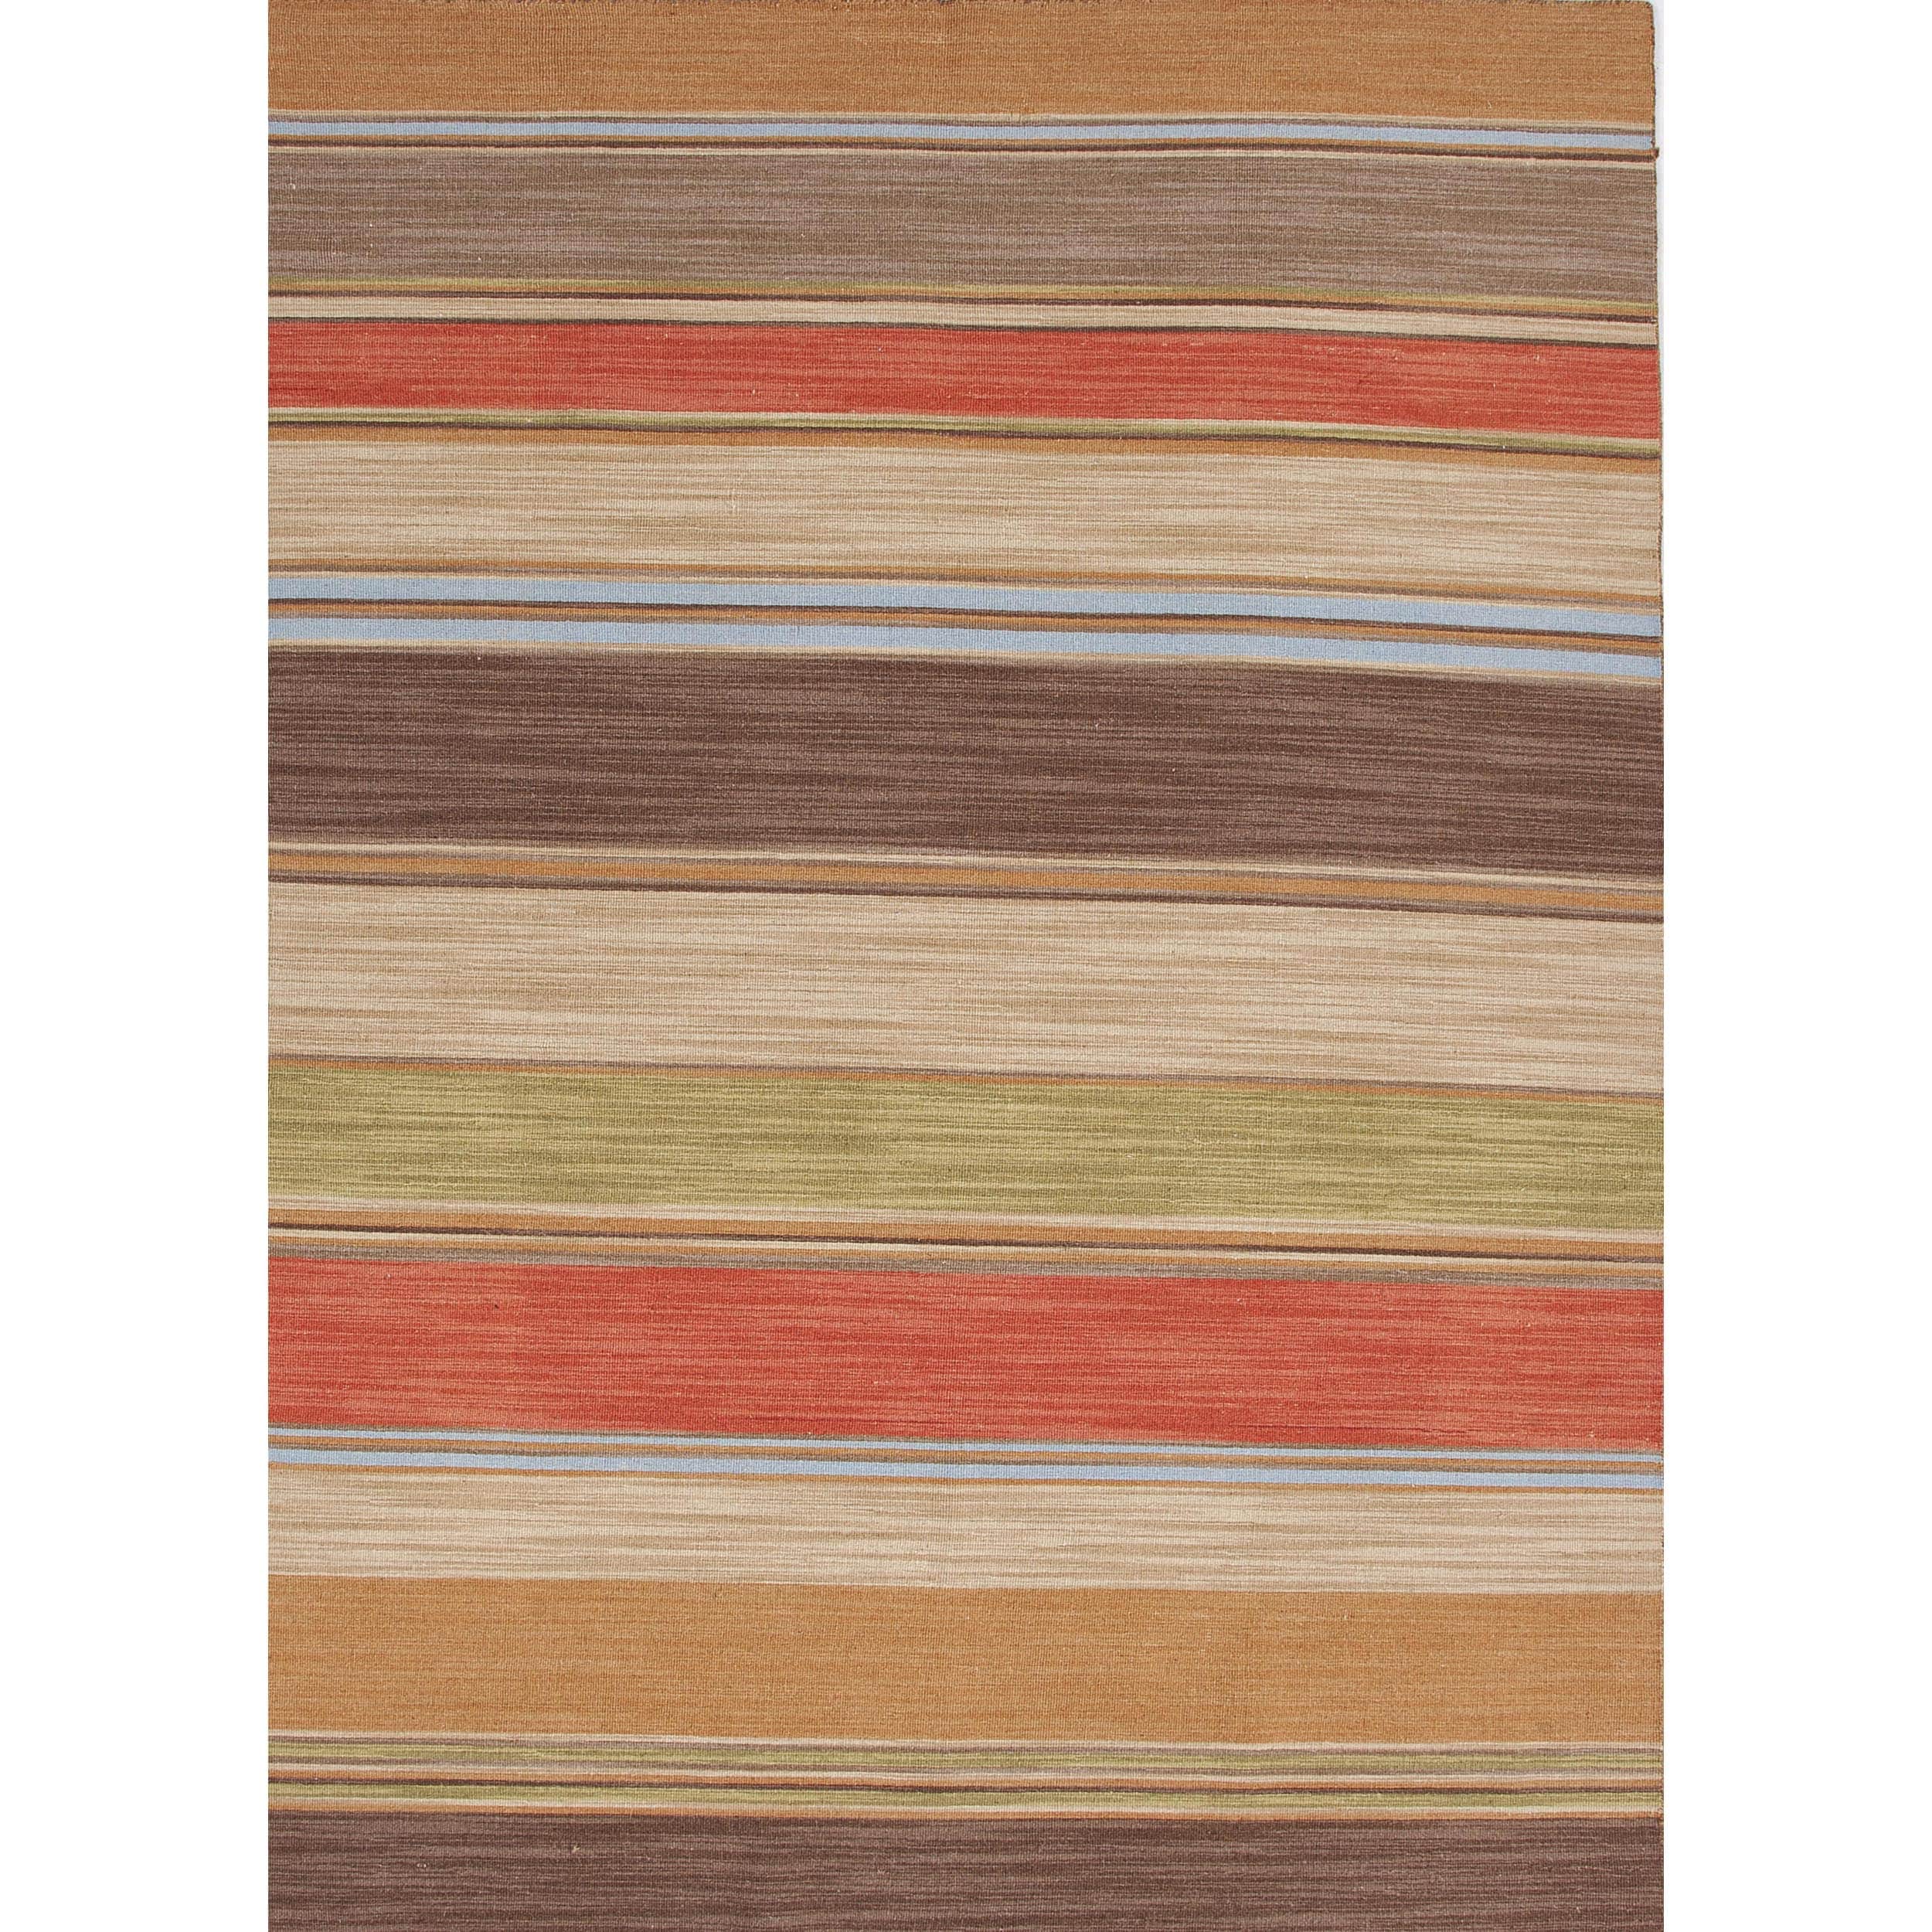 Flat Weave Stripe Multi Color Wool Runner (26 X 8)